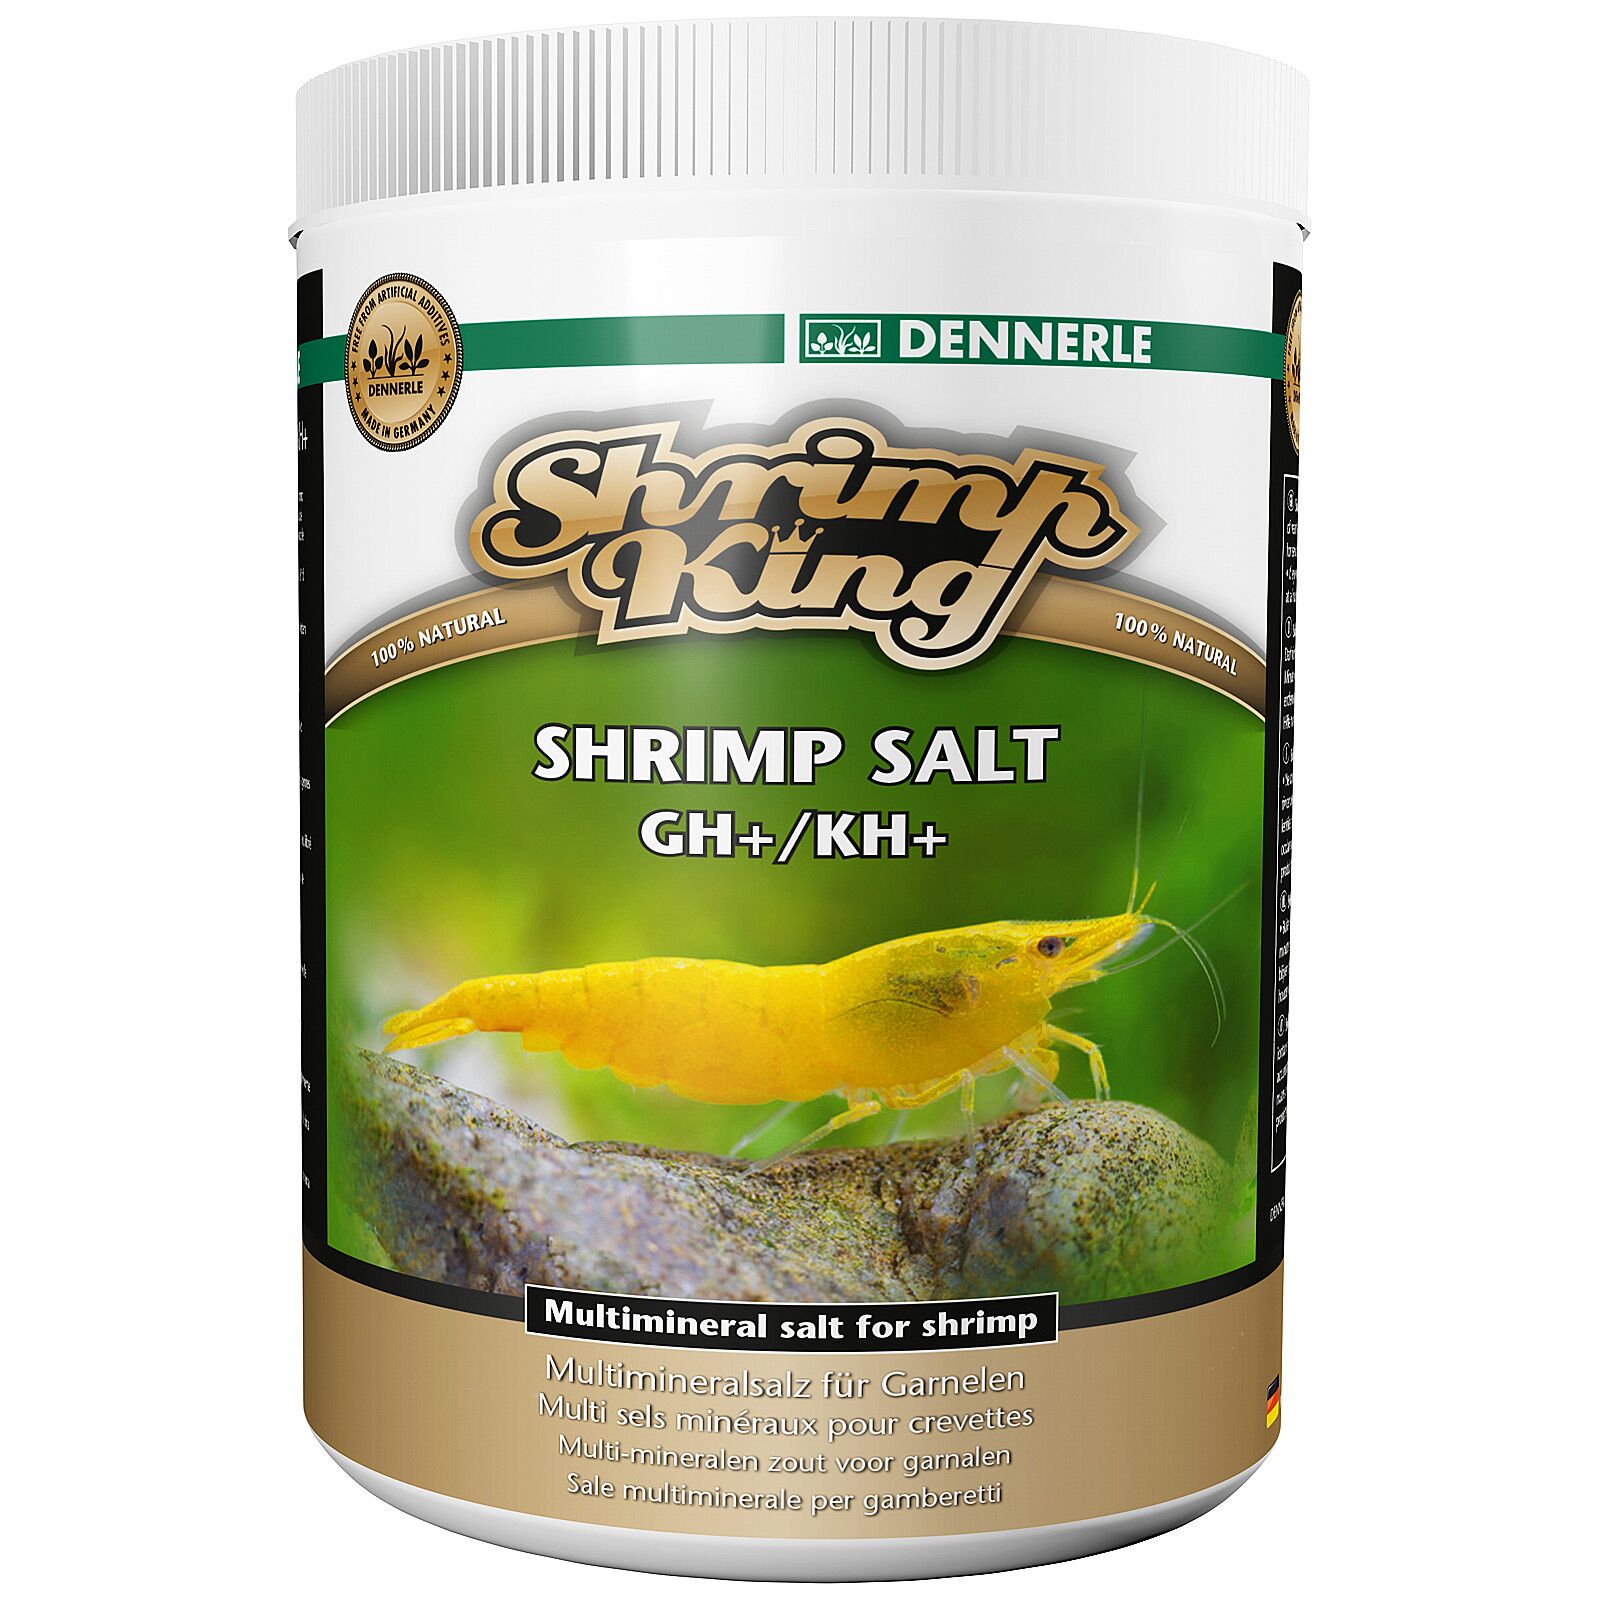 Dennerle - Shrimp King - Shrimp Salt GH/KH+